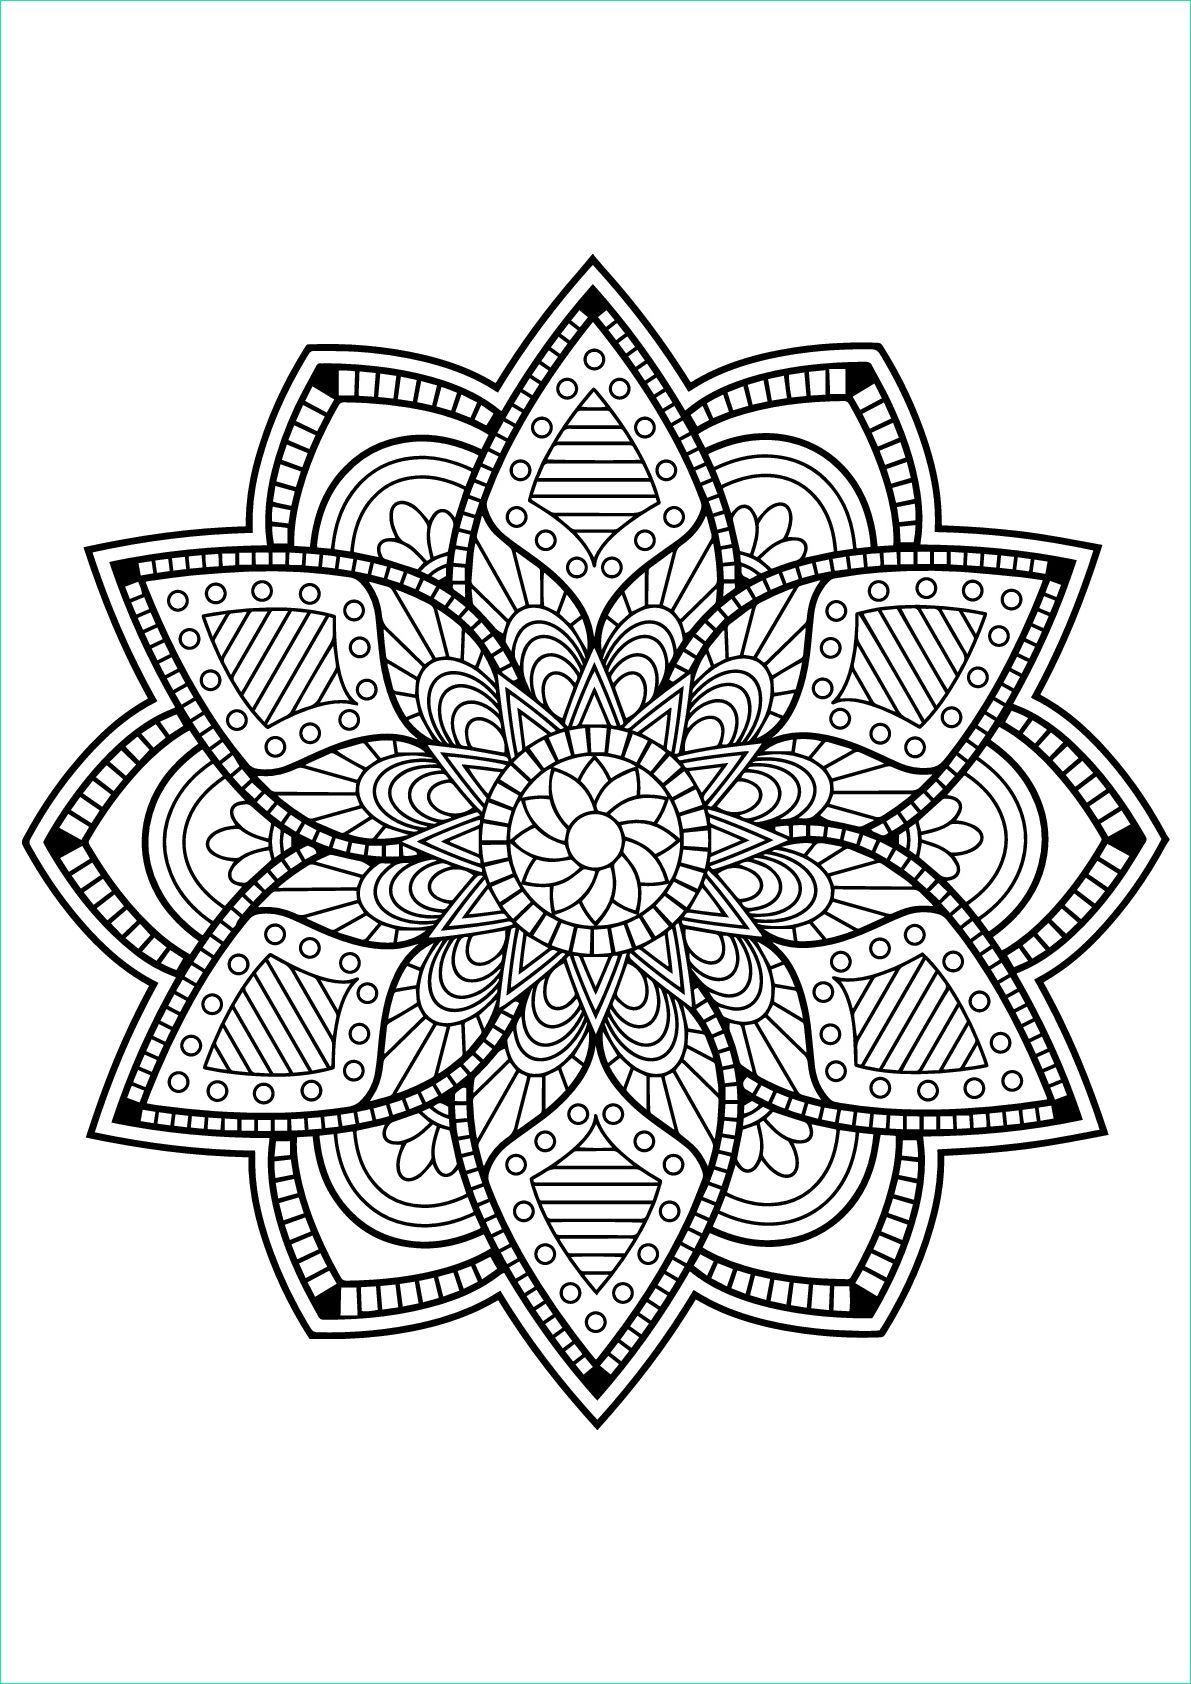 image=mandalas mandala from free coloring book for adults 24 1